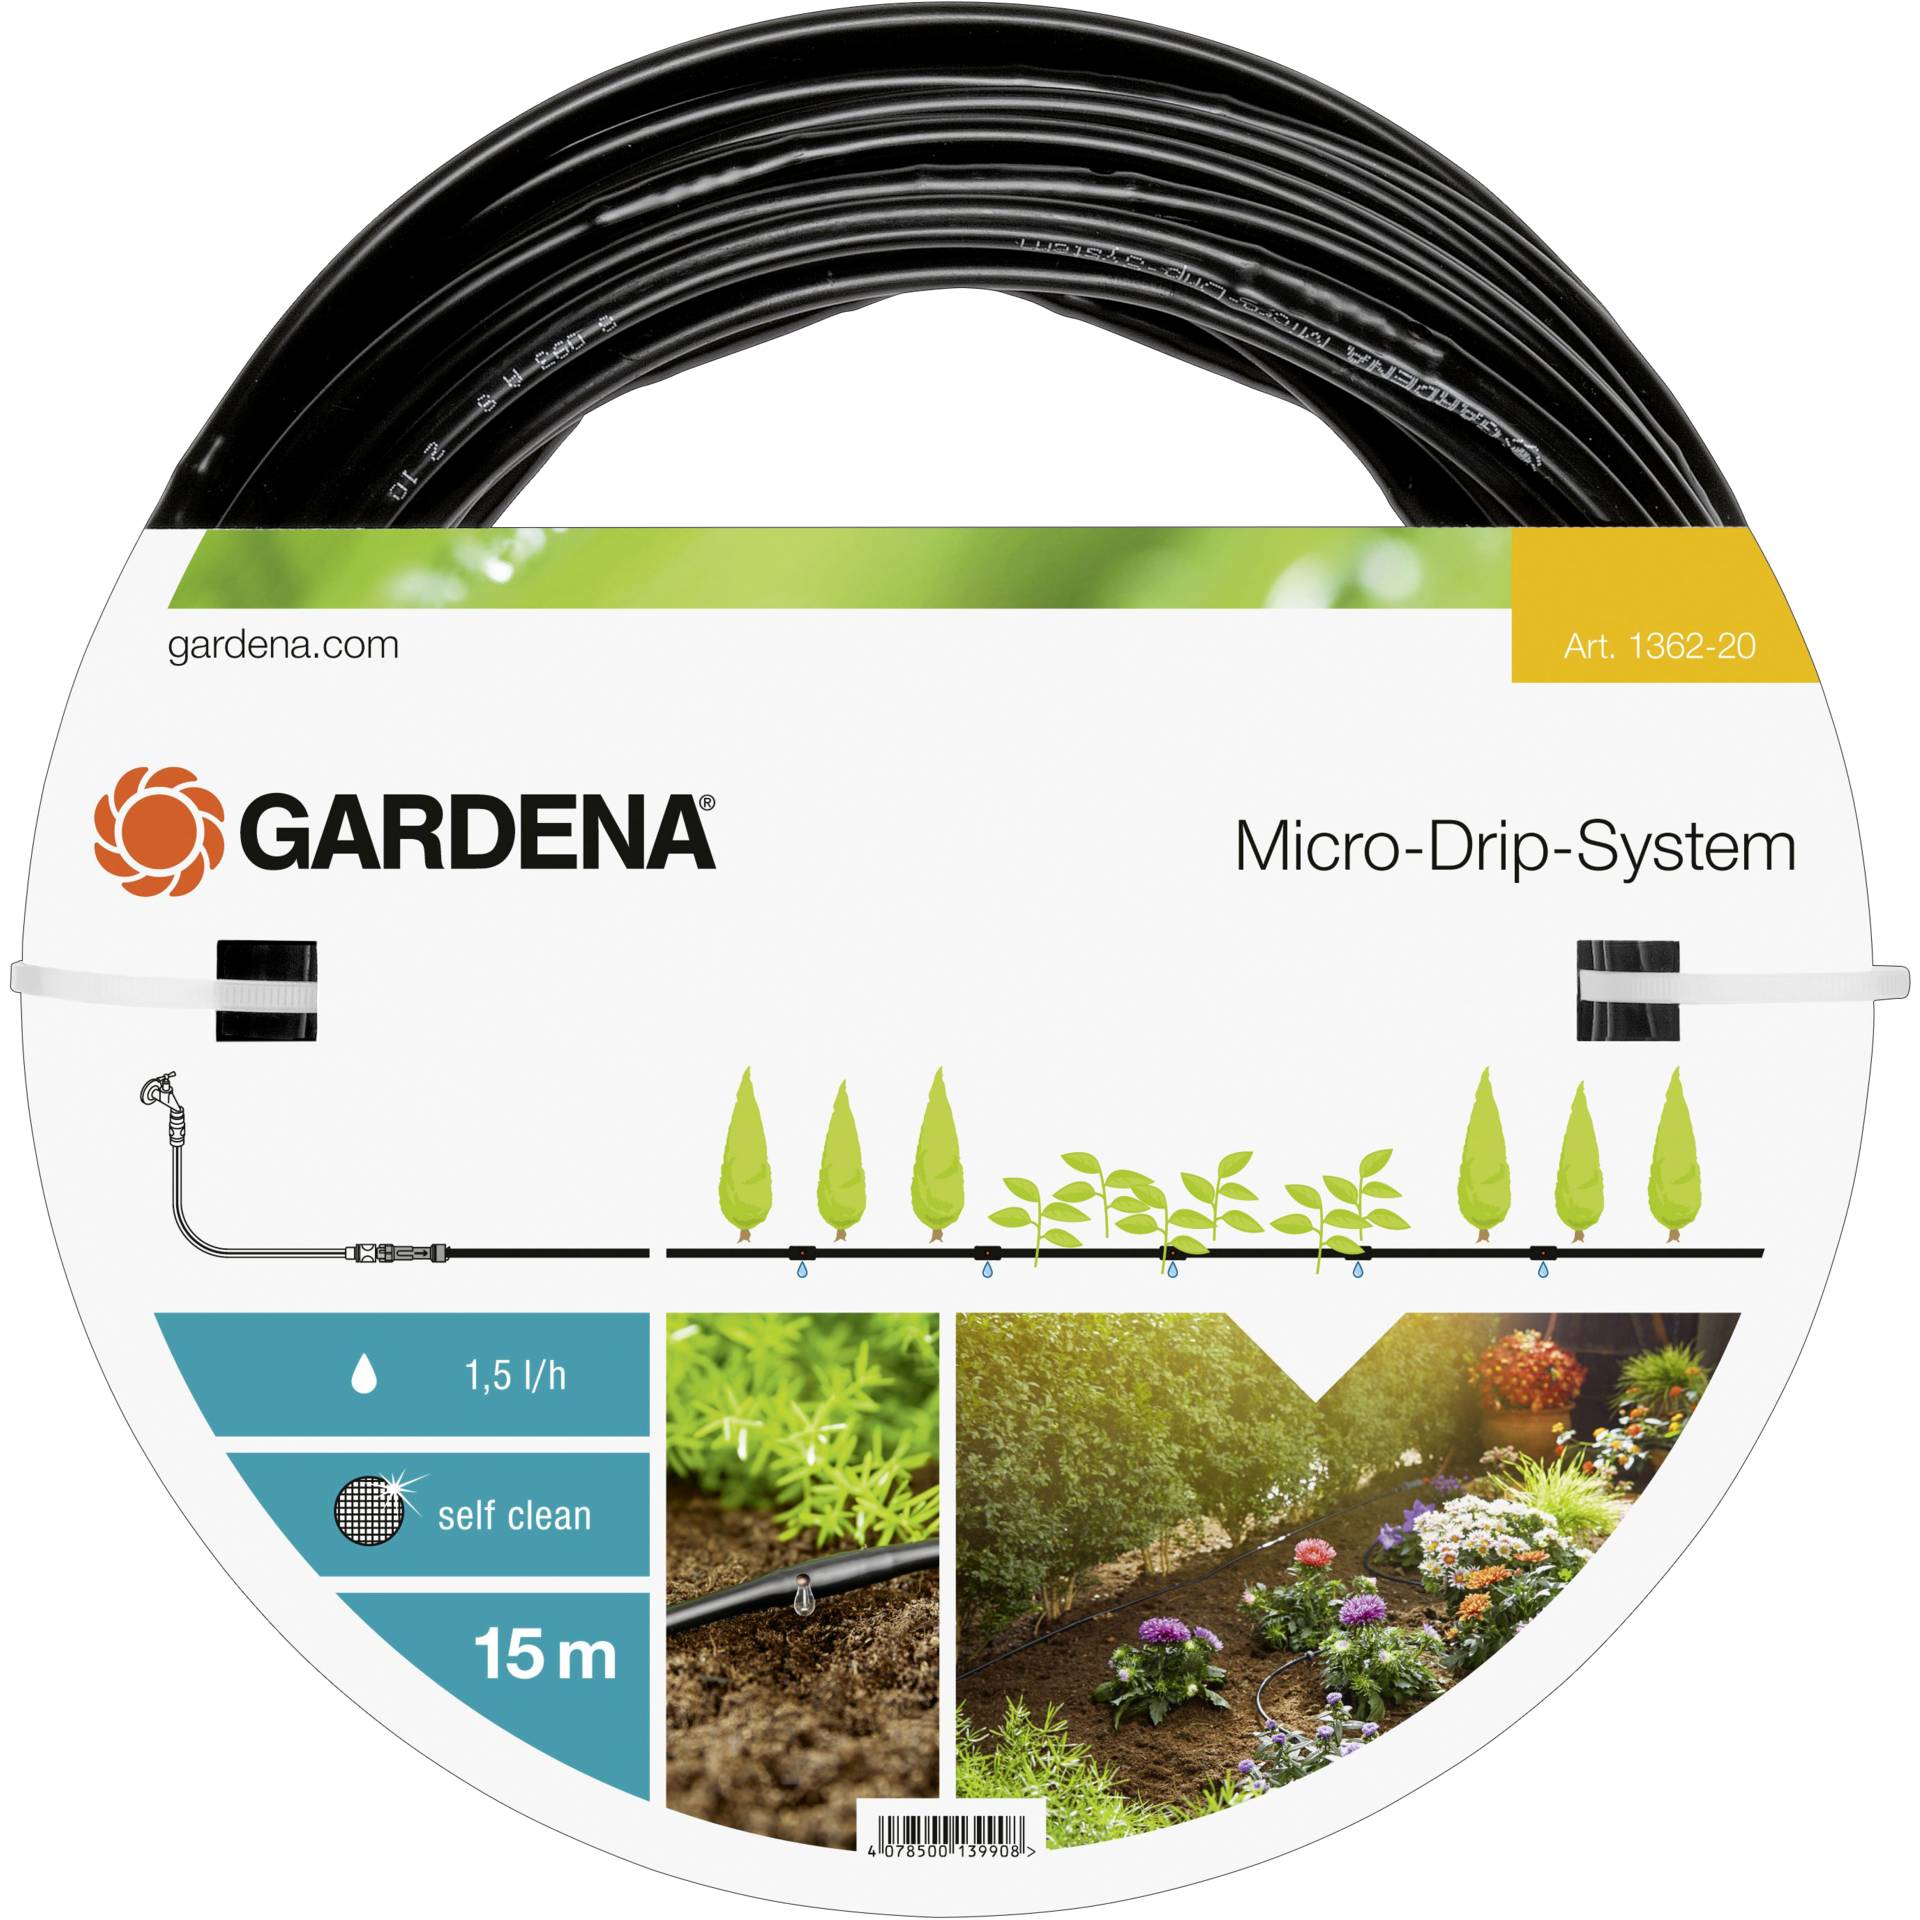 Gardena Micro-Drip-System gocc. 4,6 mm (3/16), 1,5 l/h, 15 m